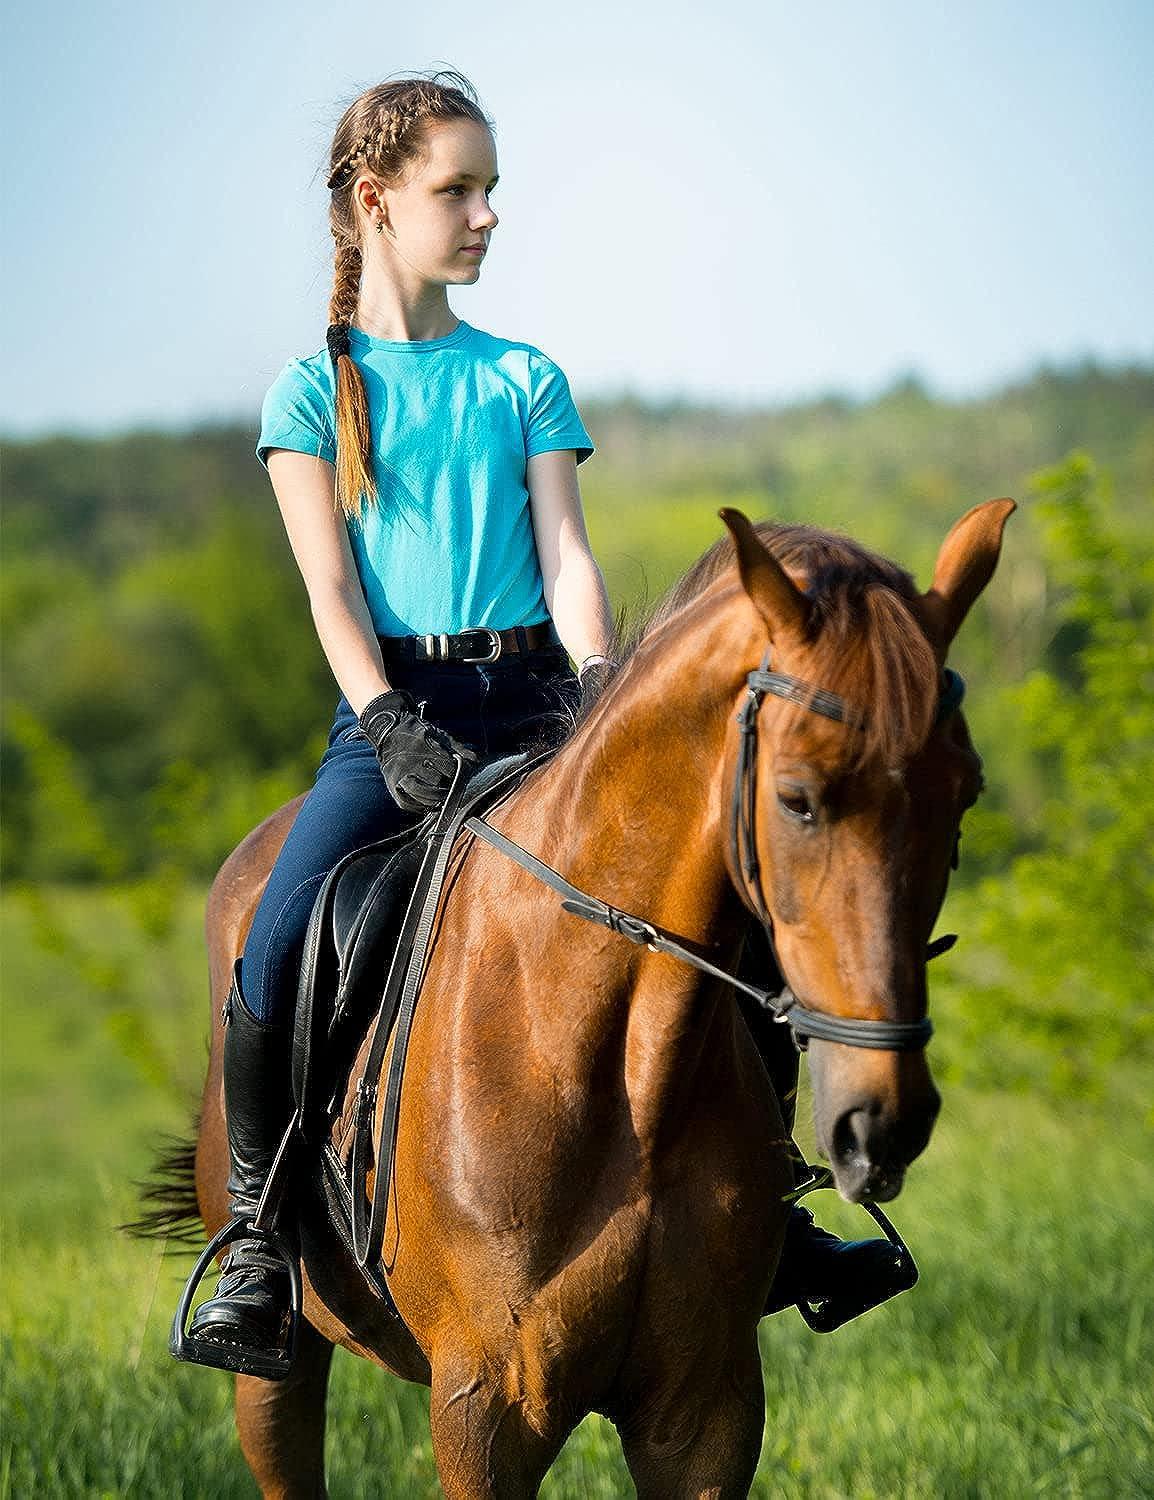 Women Ladies Horse Riding Leggings Tight Grip Phone Pocket